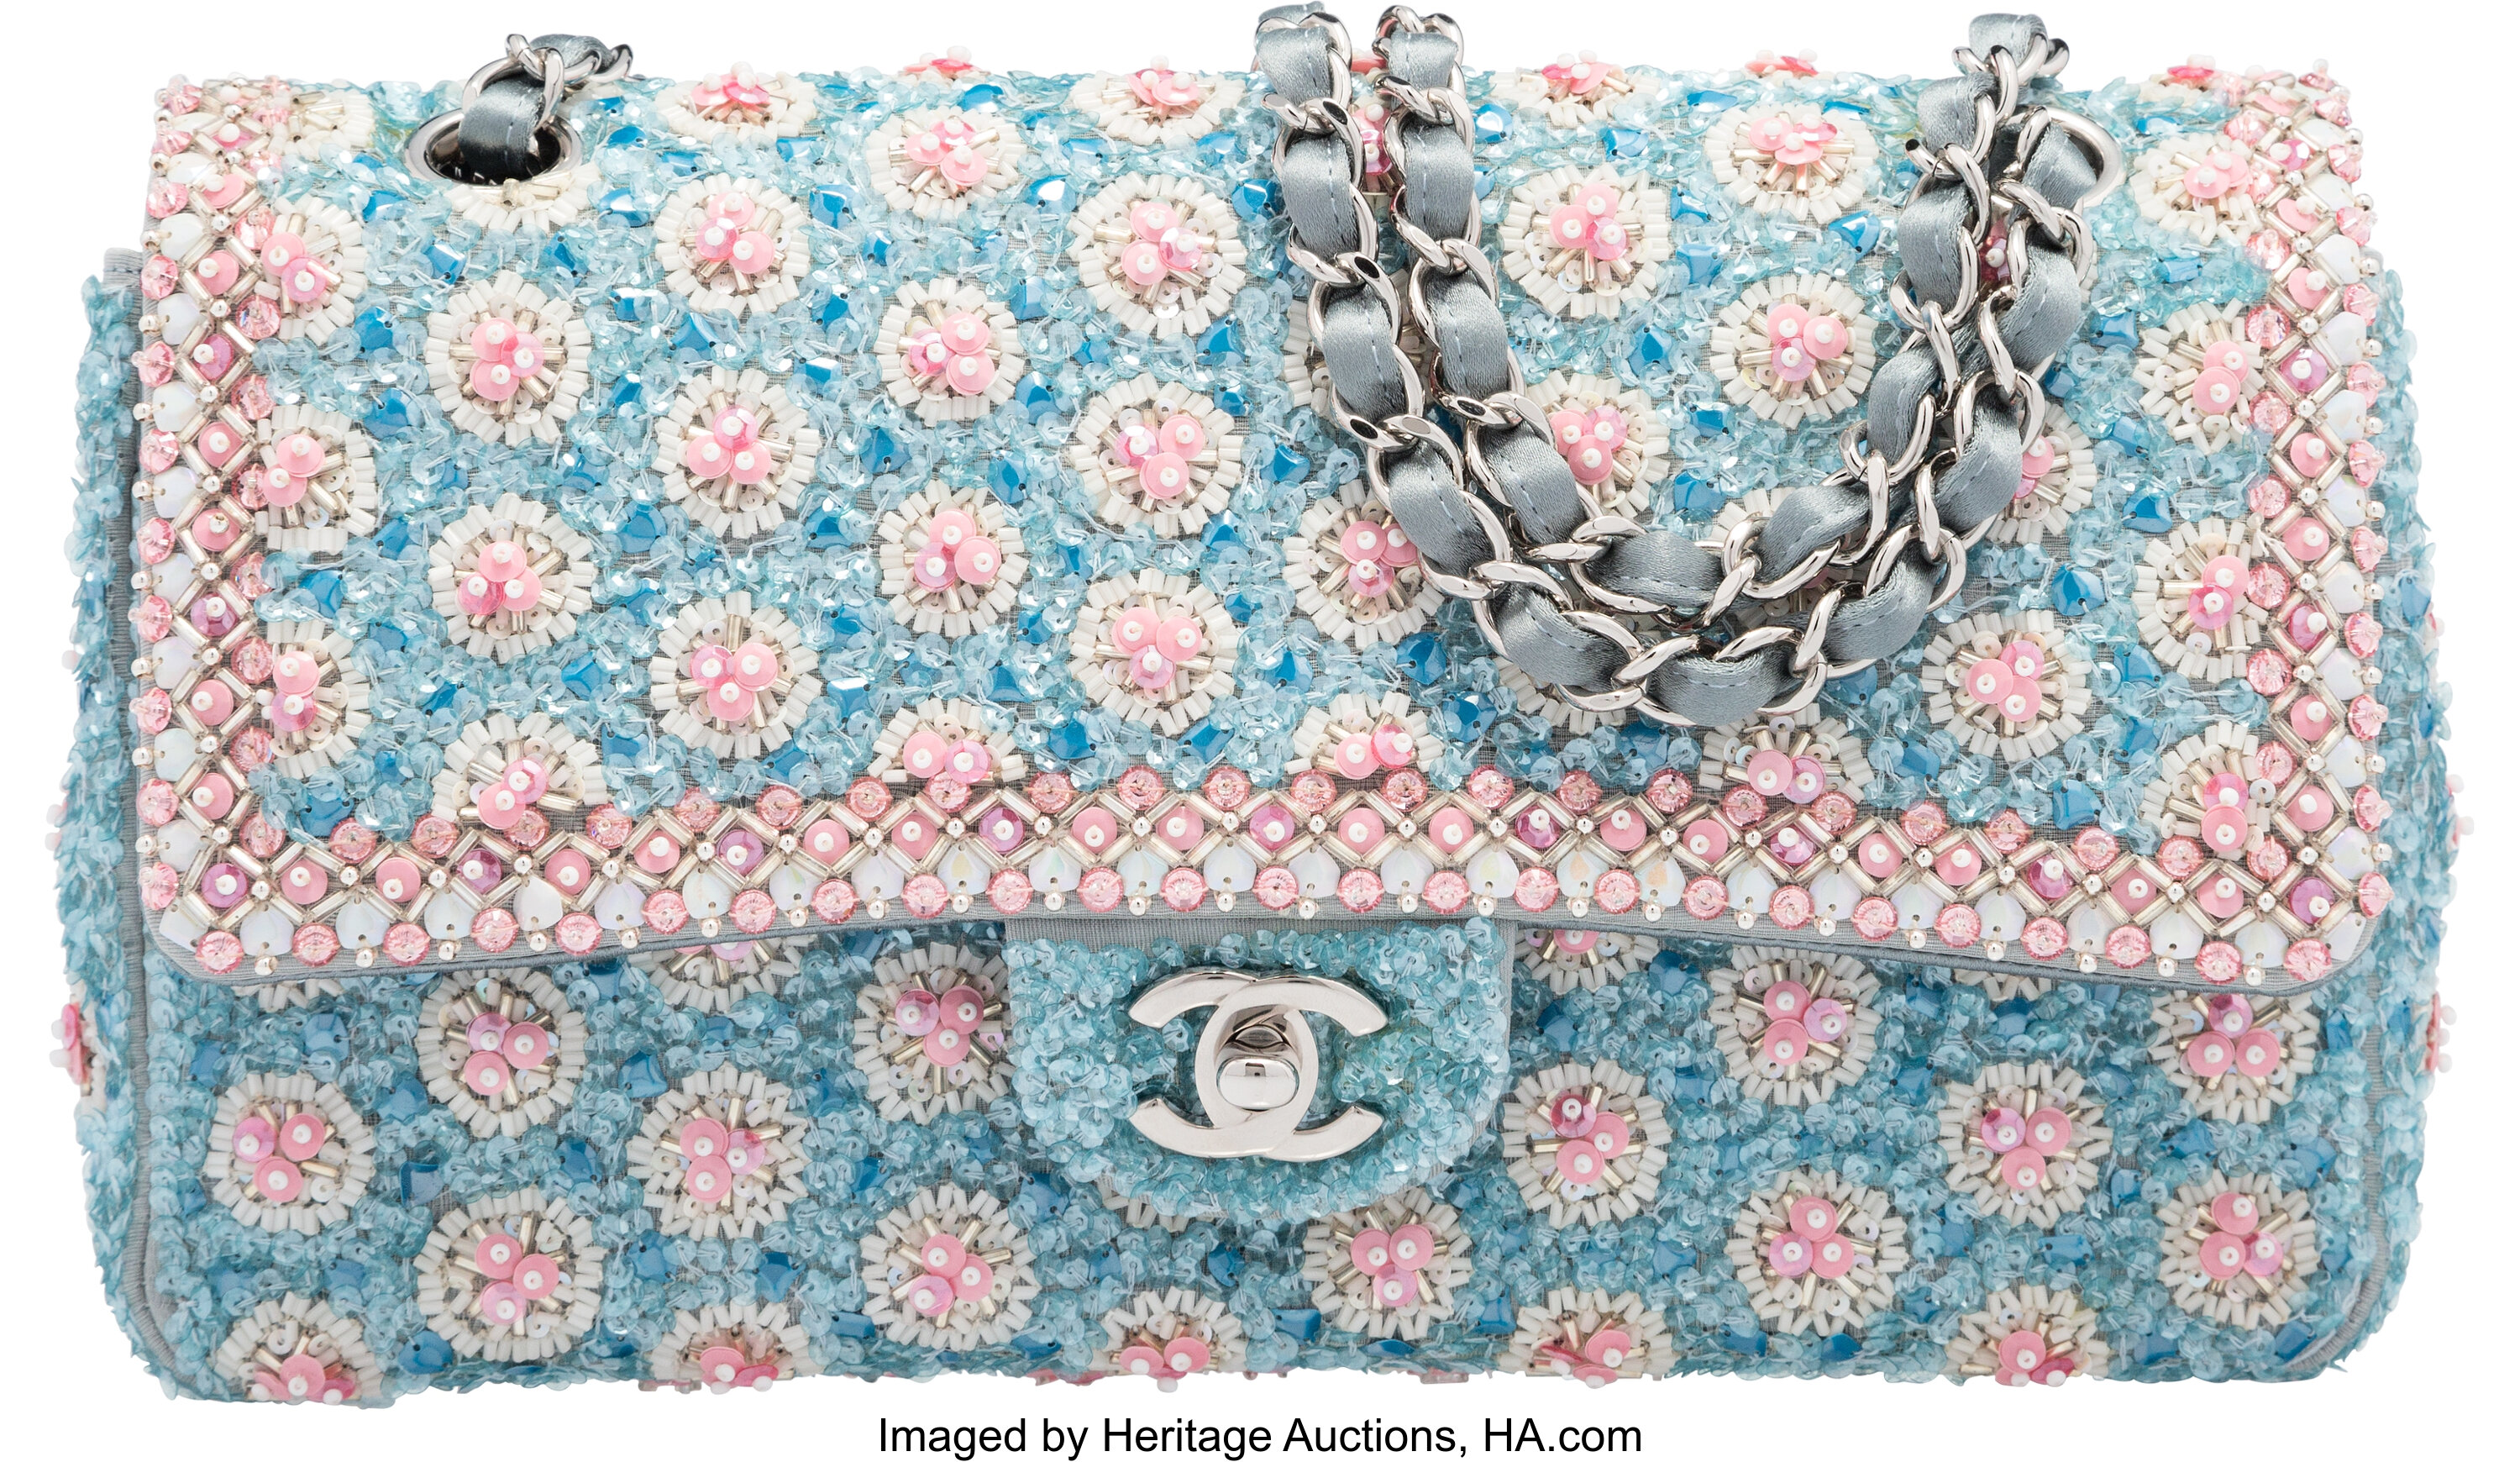 Chanel Limited Edition Medium Double Flap Handbag